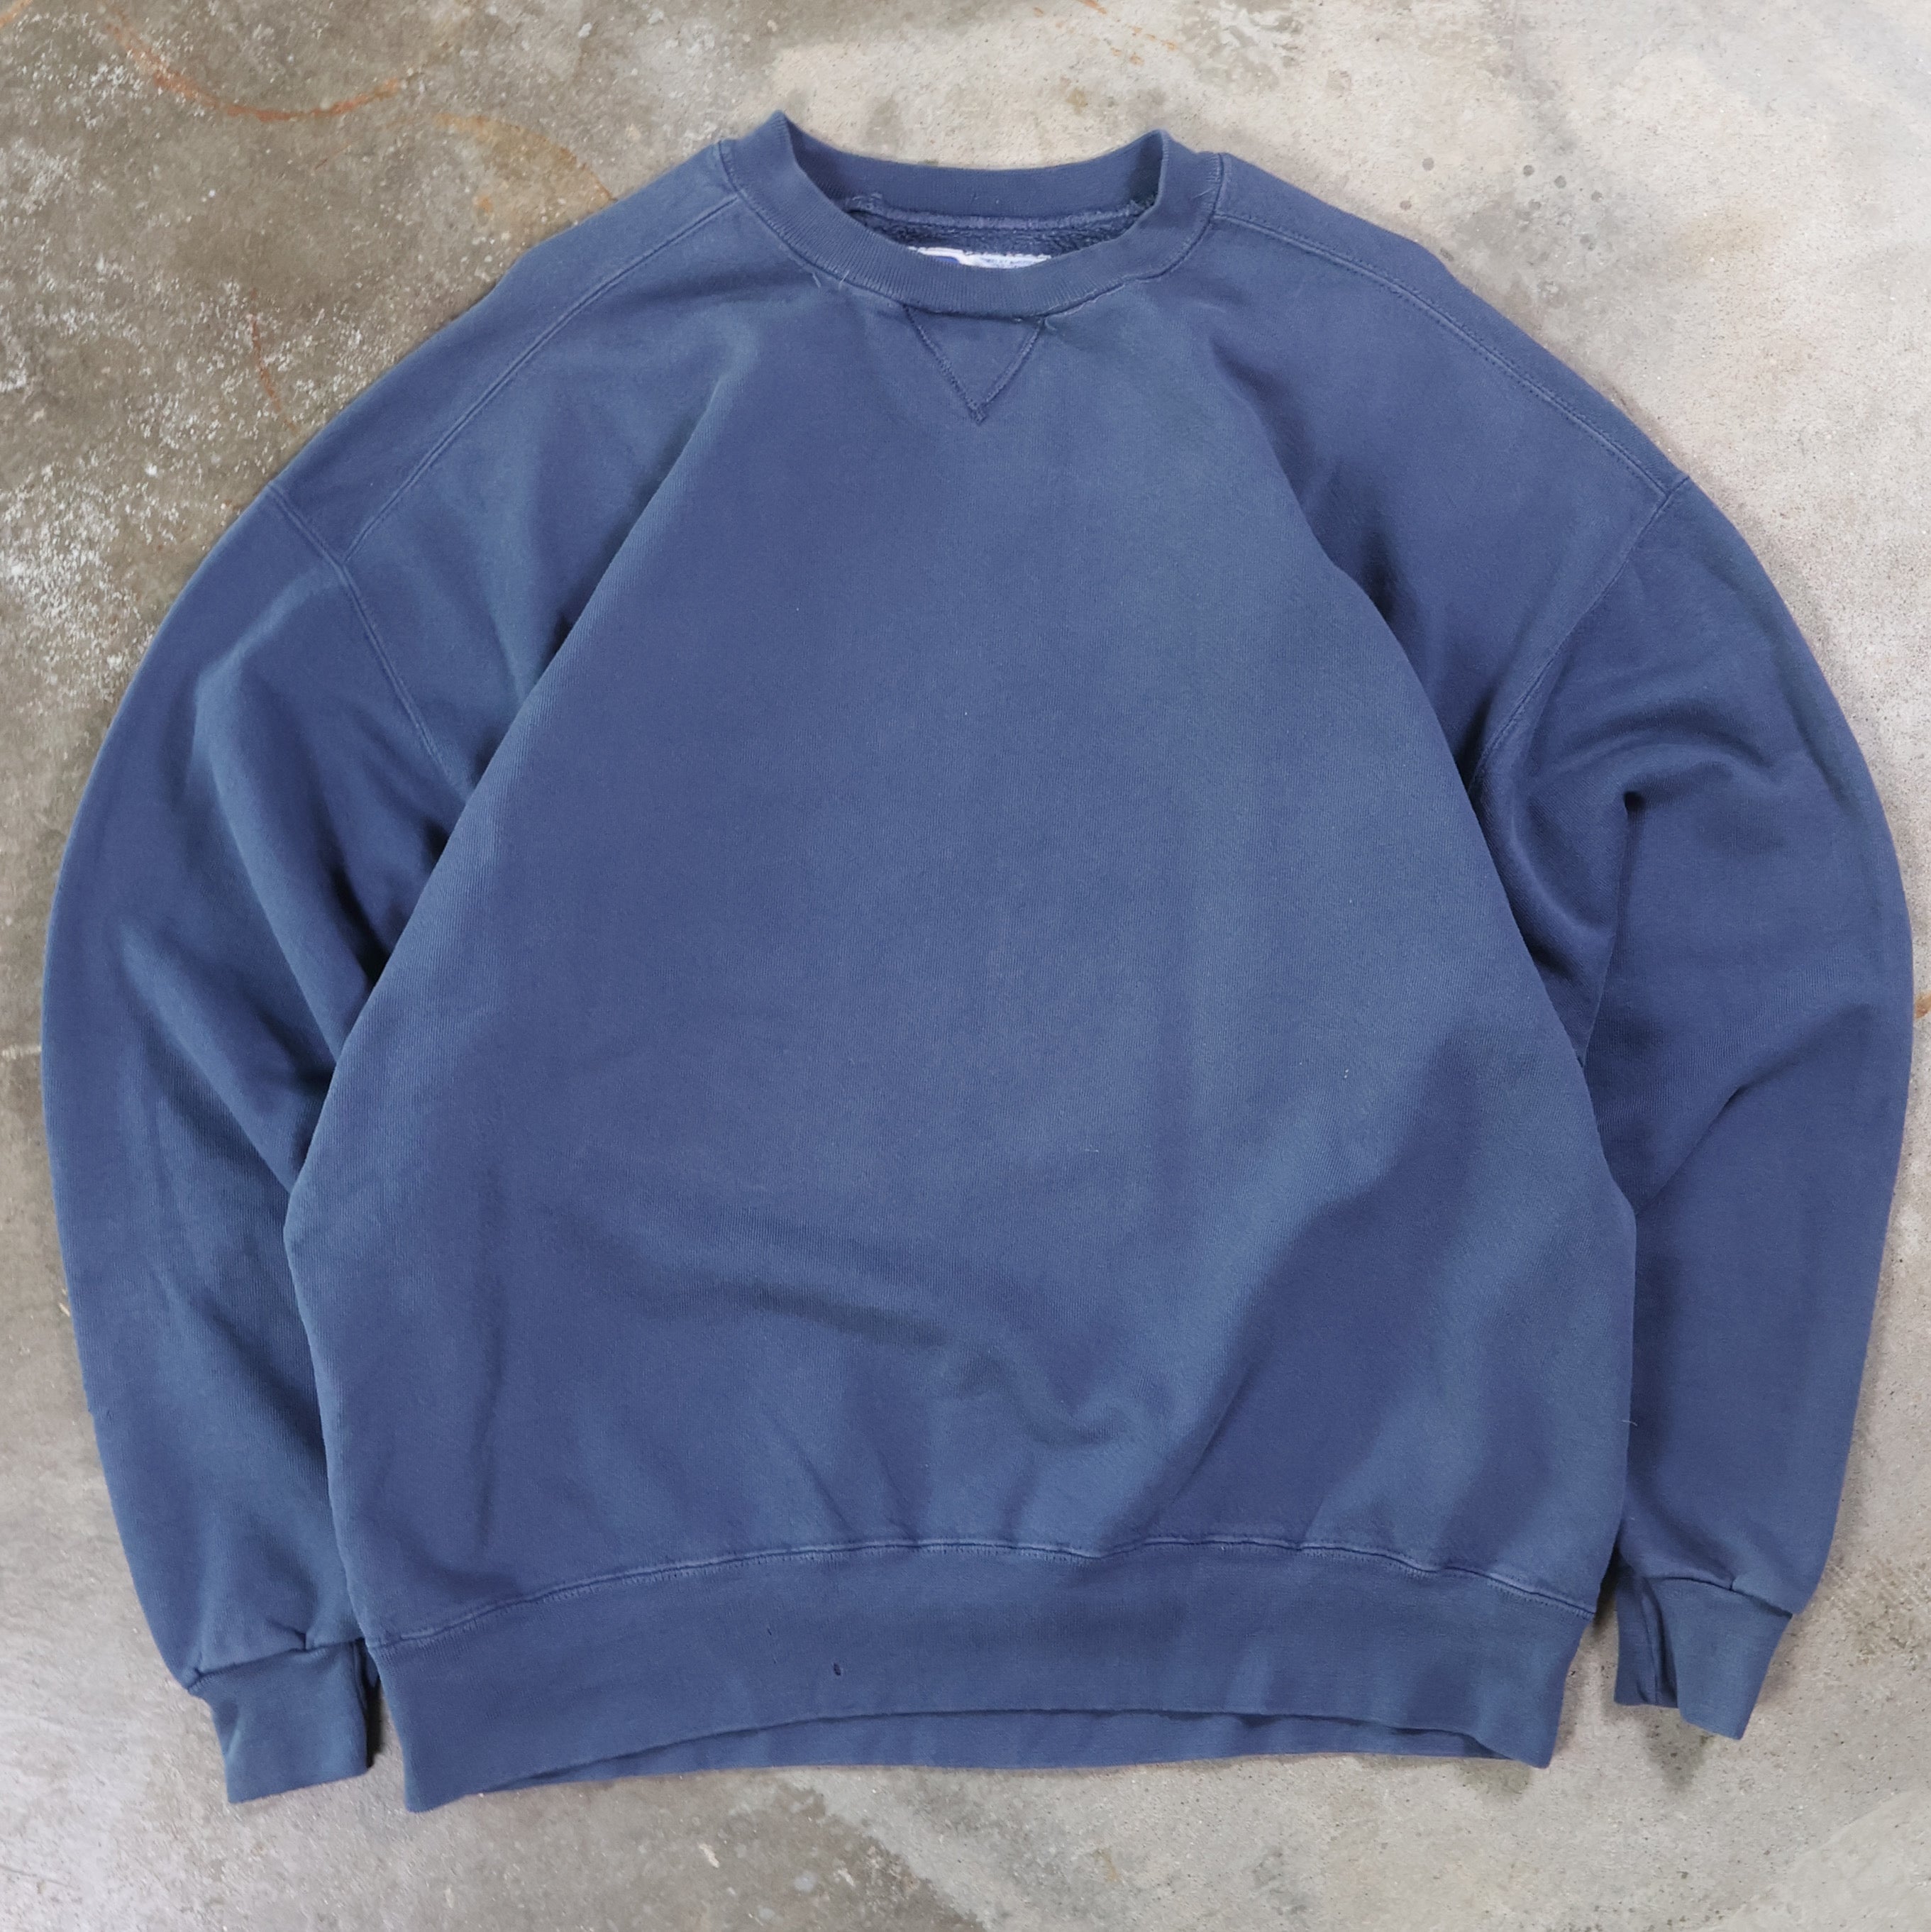 Blueberry Blue Russell Sweatshirt 90s (XL)